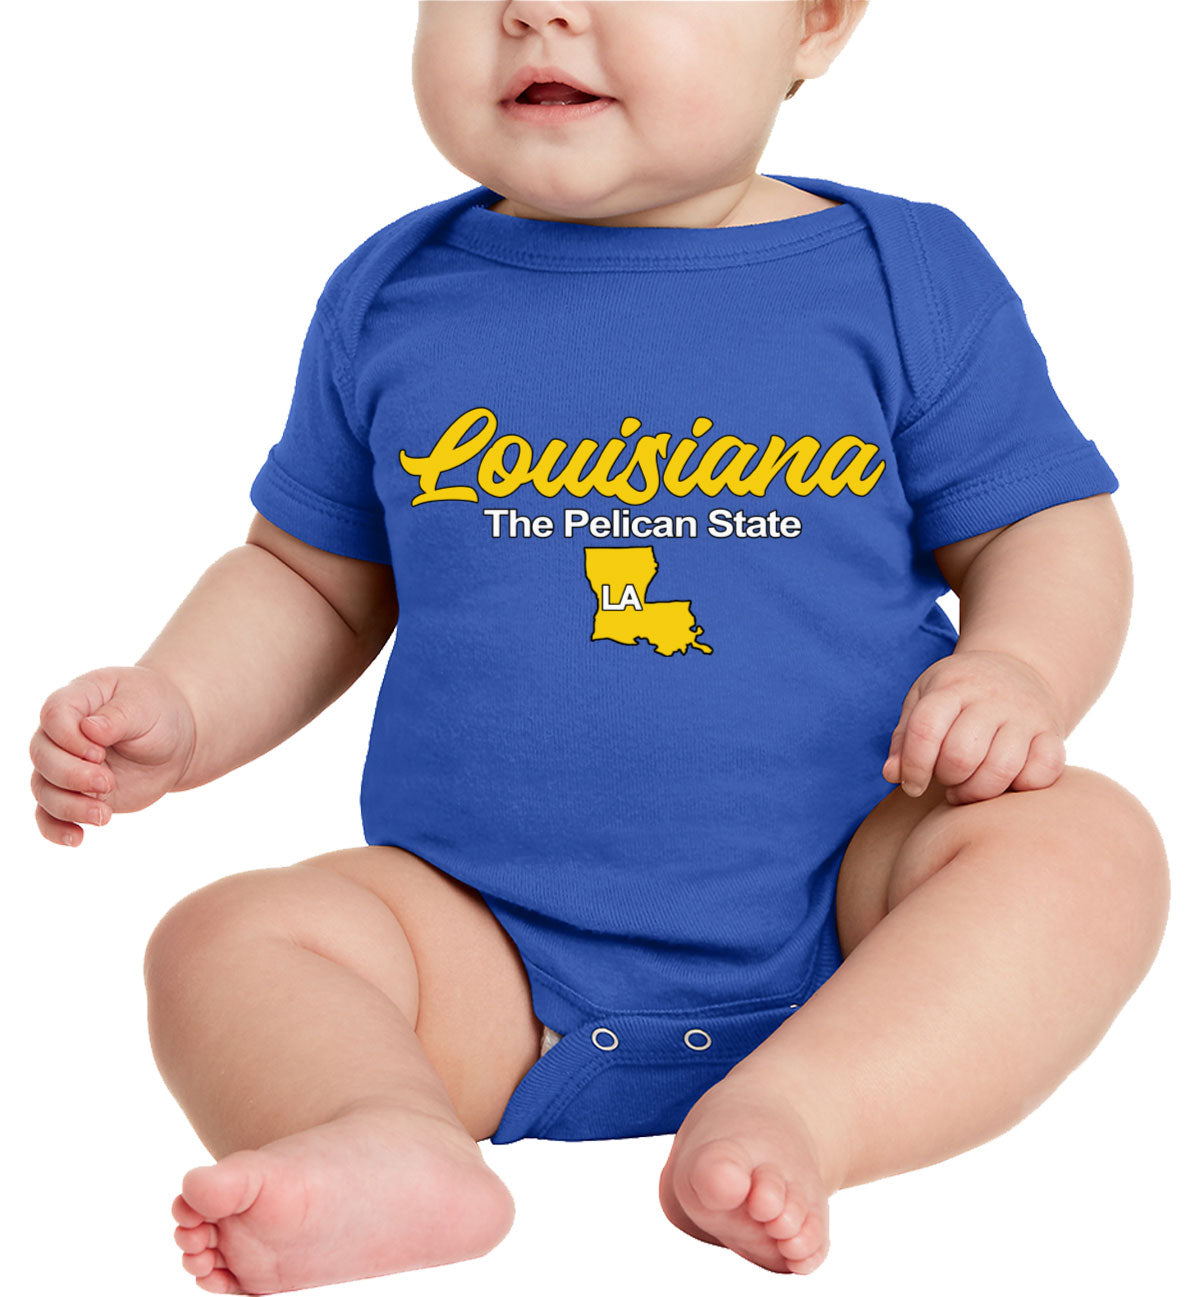 Louisiana The Pelican State Baby Onesie